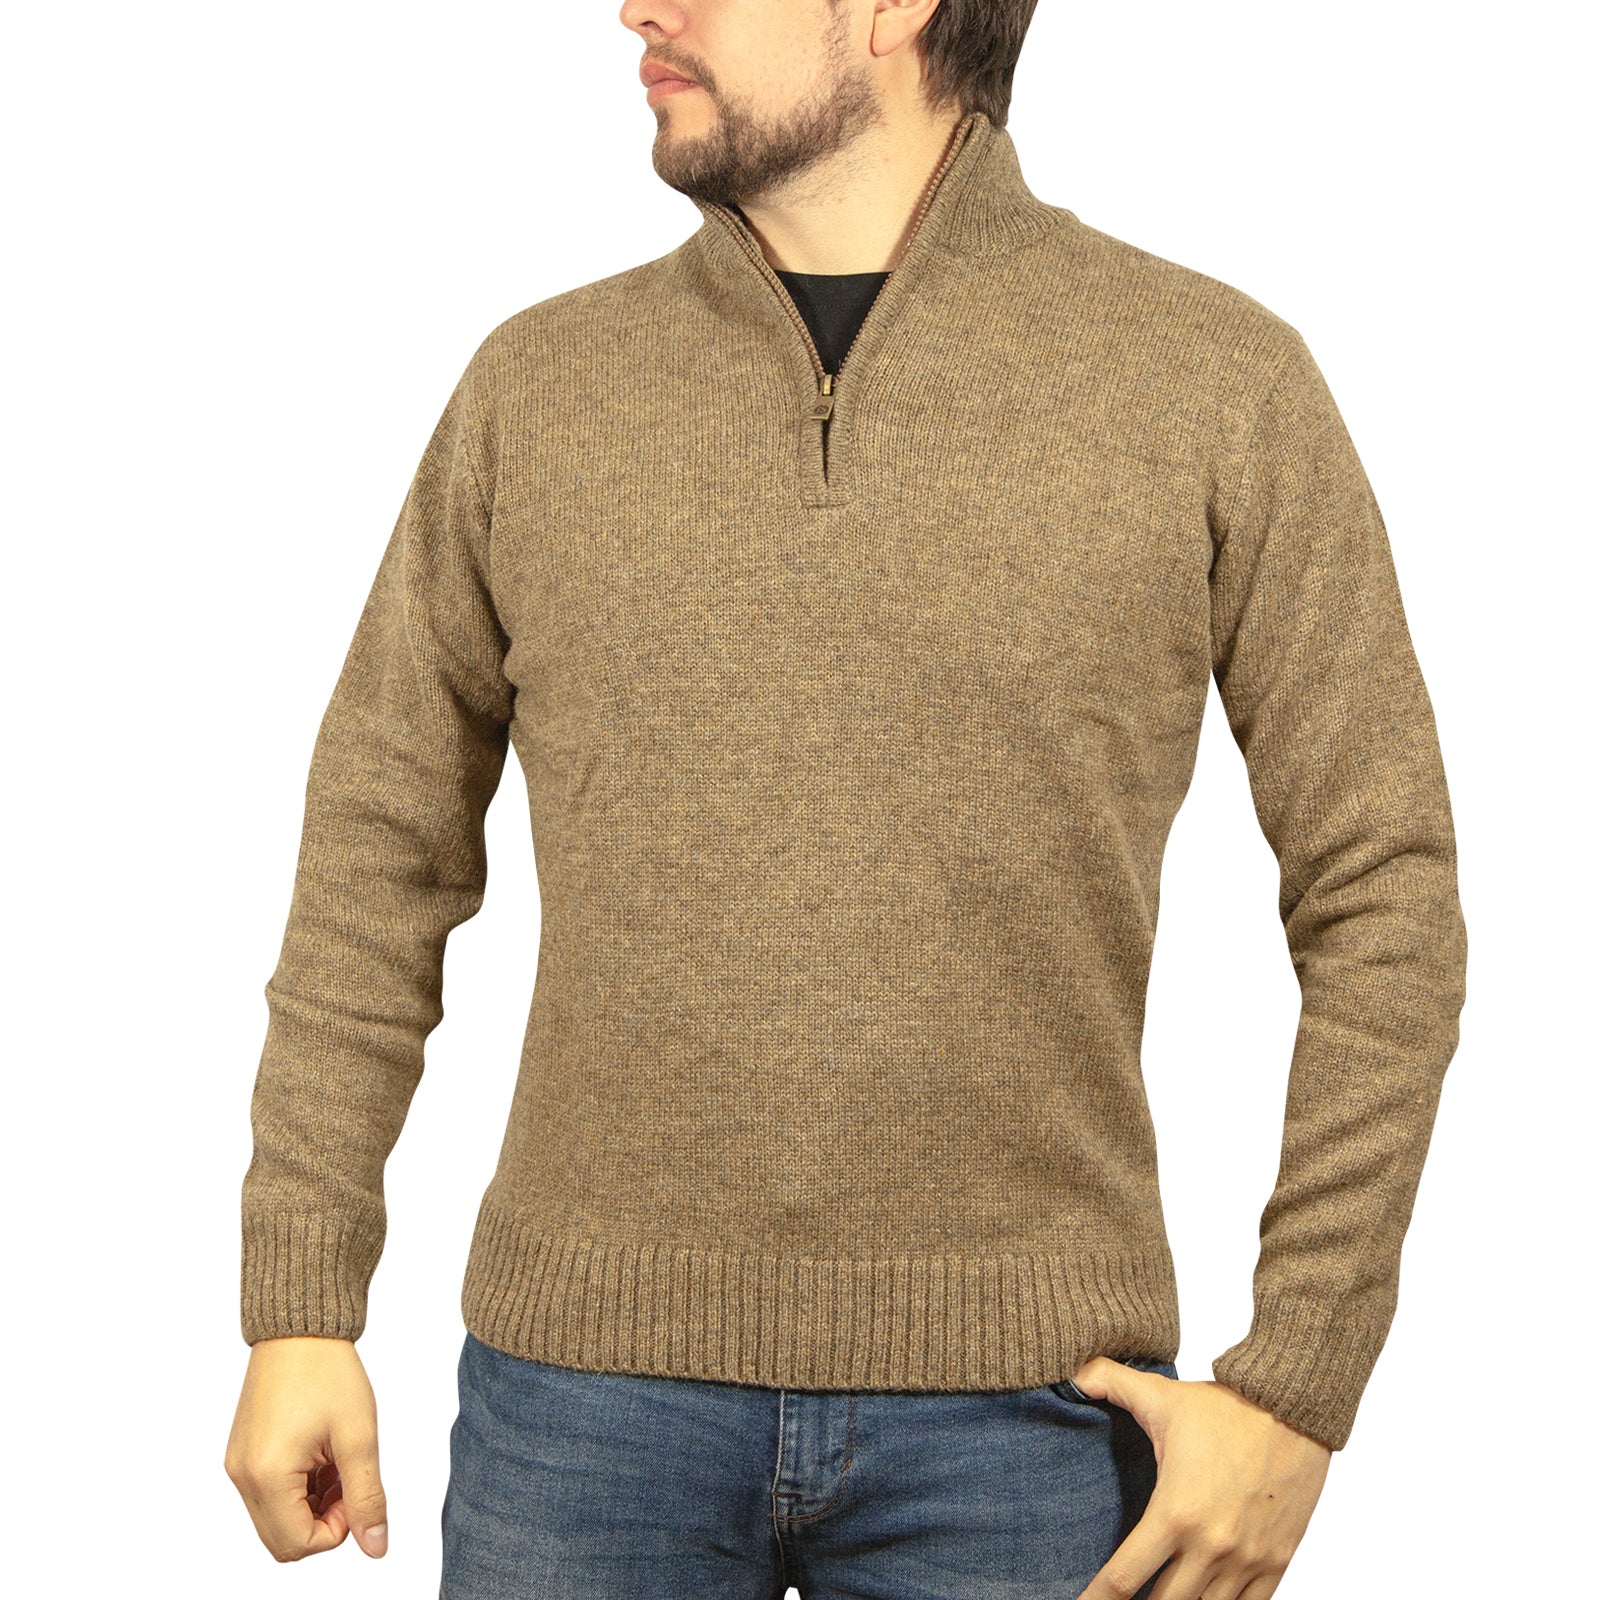 100% SHETLAND WOOL Half Zip Up Knit JUMPER Pullover Mens Sweater Knitted - Nutmeg (23) - L